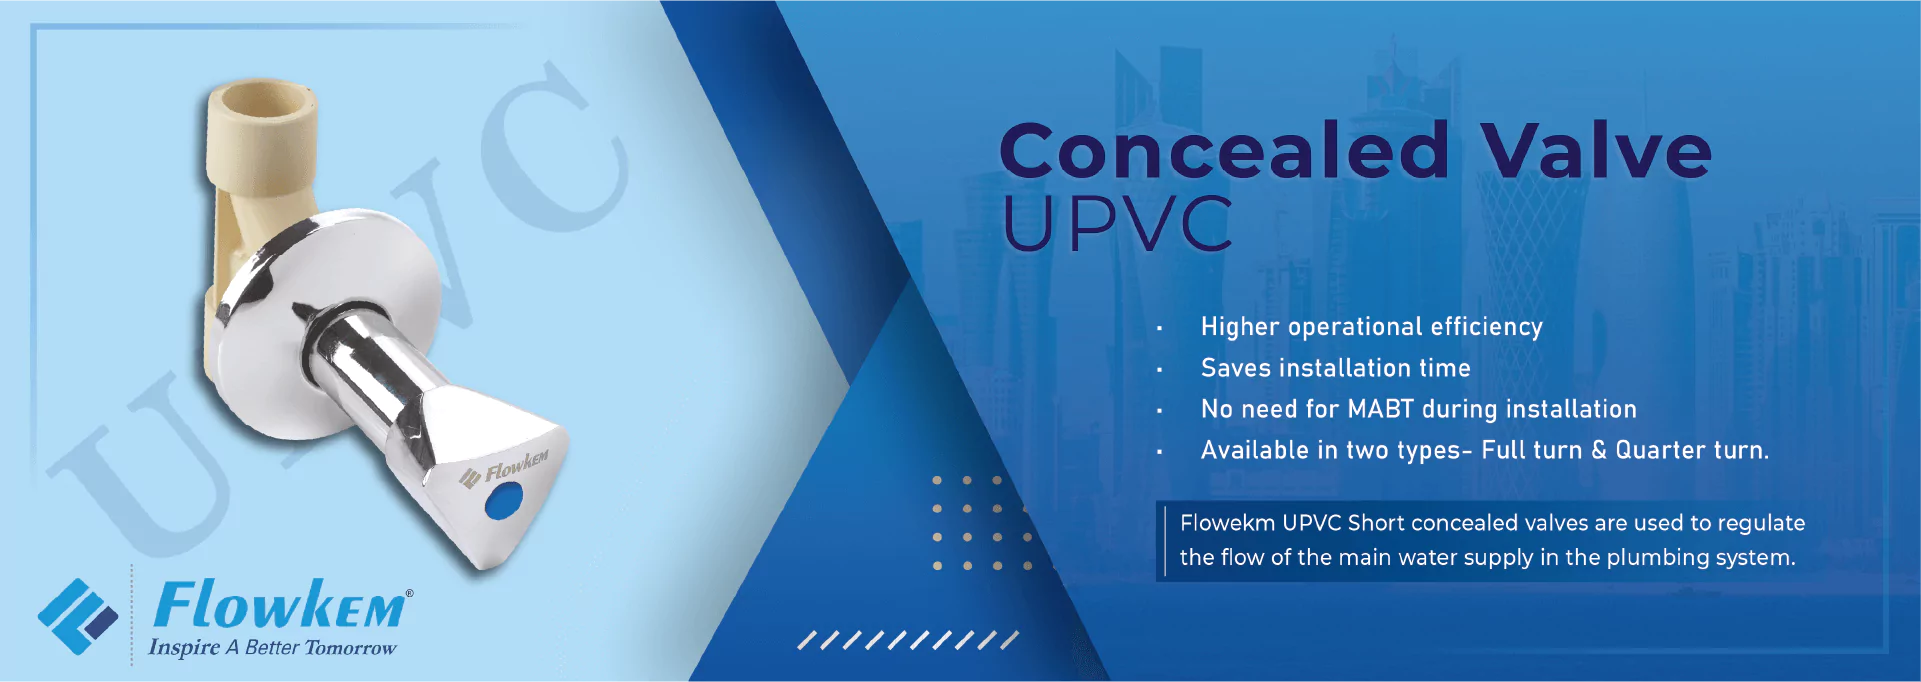 Flowkem Concealed Valve Upvc